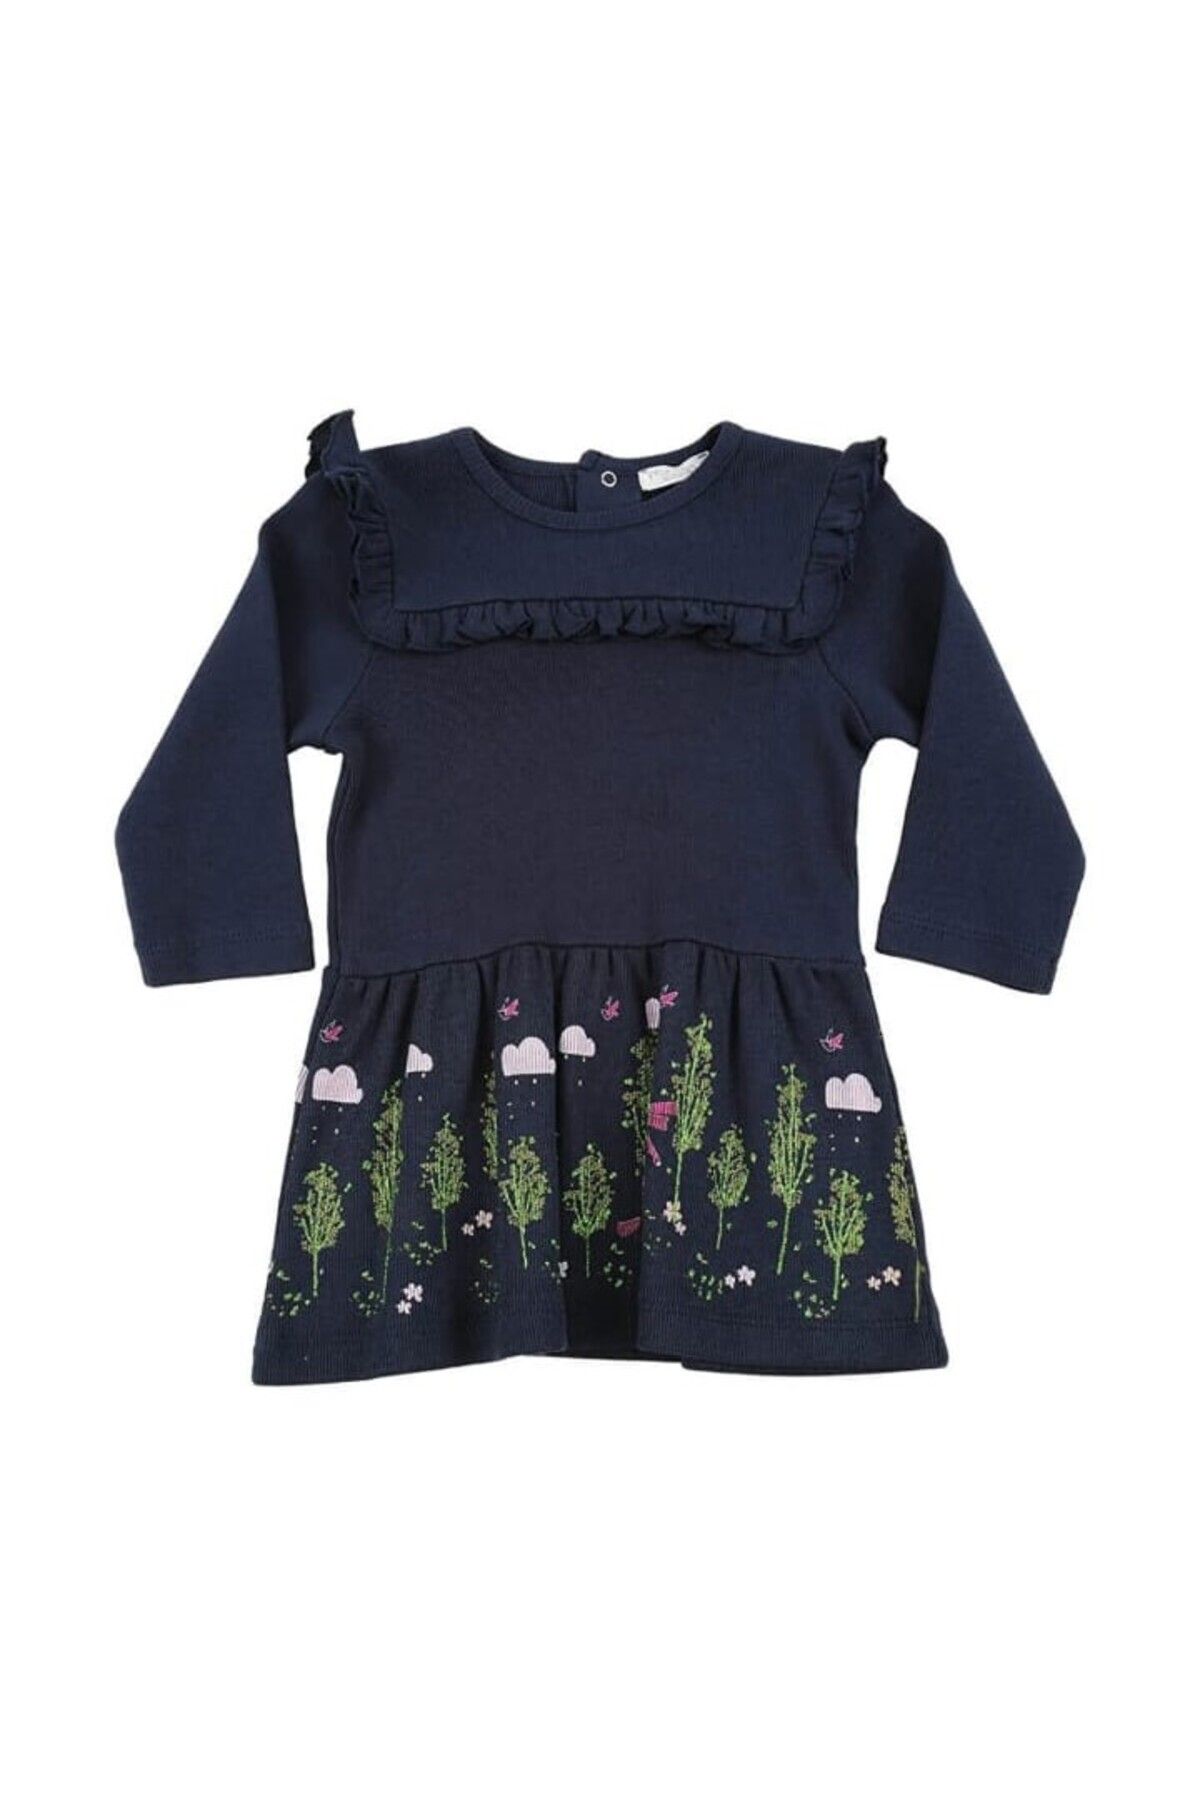 Zeyland Küçük Kız Çocuk Bebek %100 Pamuk Cotton Lacivert Renk Elbise 82m2alz38